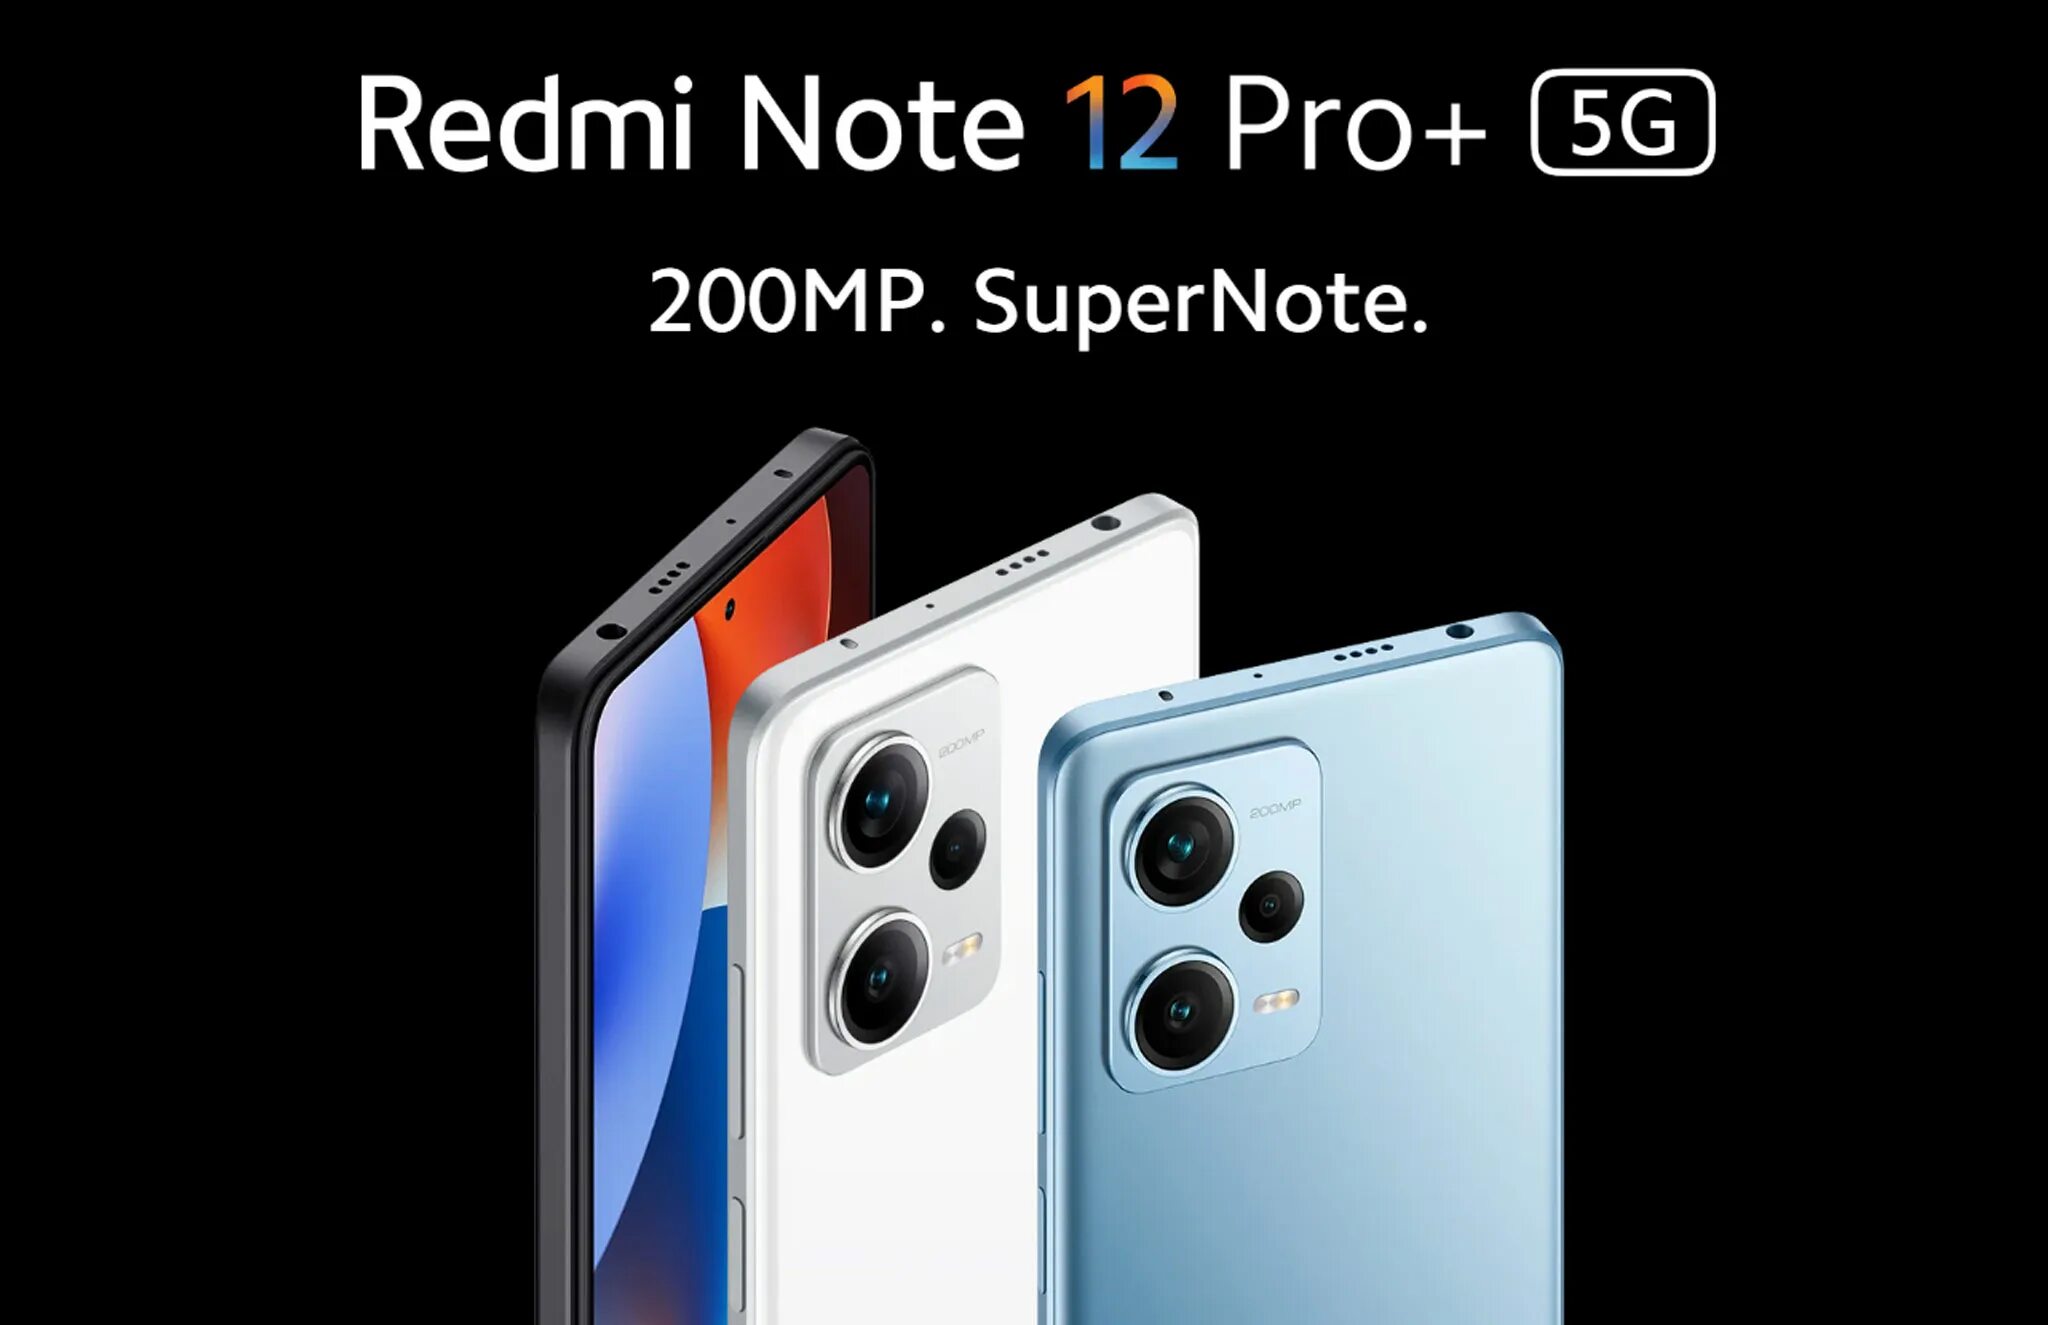 Redmi Note 12 Pro Plus. Redmi Note 12 Pro Китай. Redmi Note 12 Note Pro. Note 12 Pro 5g India. Redmi note 12 pro 5g midnight black